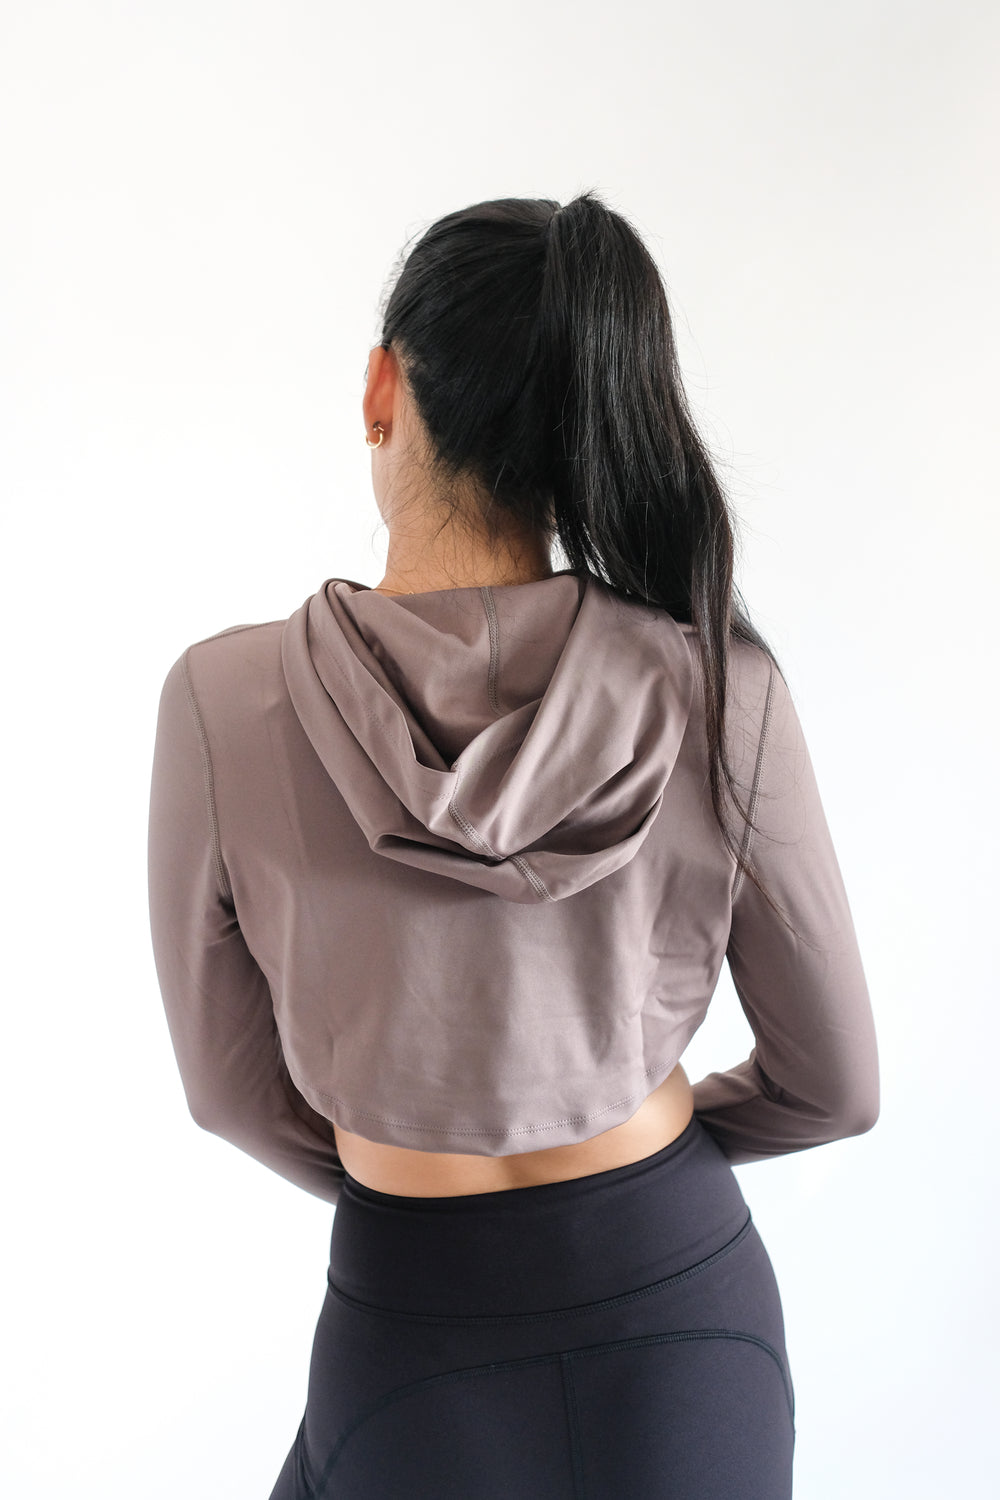 SweatyRocks Women's Casual Solid Cut Out Front Long Sleeve Pullover Crop  Top Sweatshirt